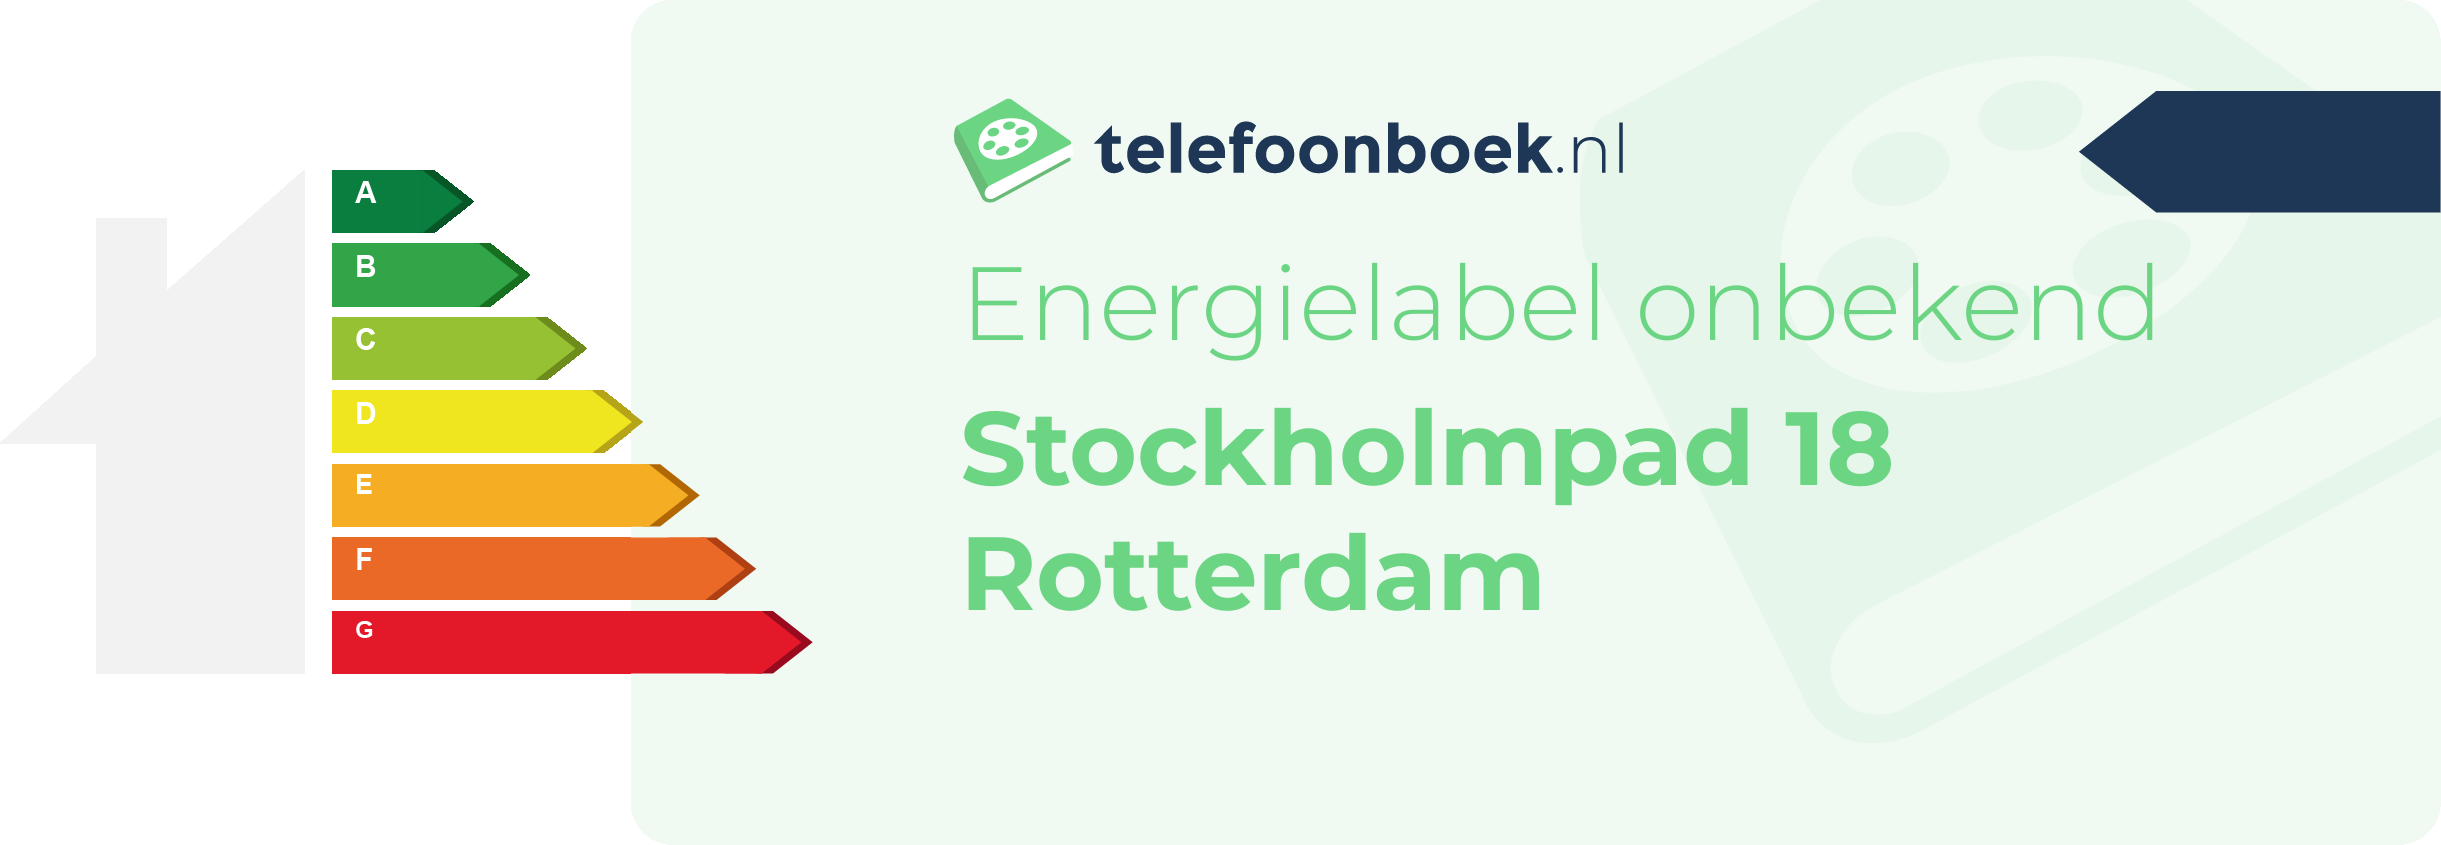 Energielabel Stockholmpad 18 Rotterdam